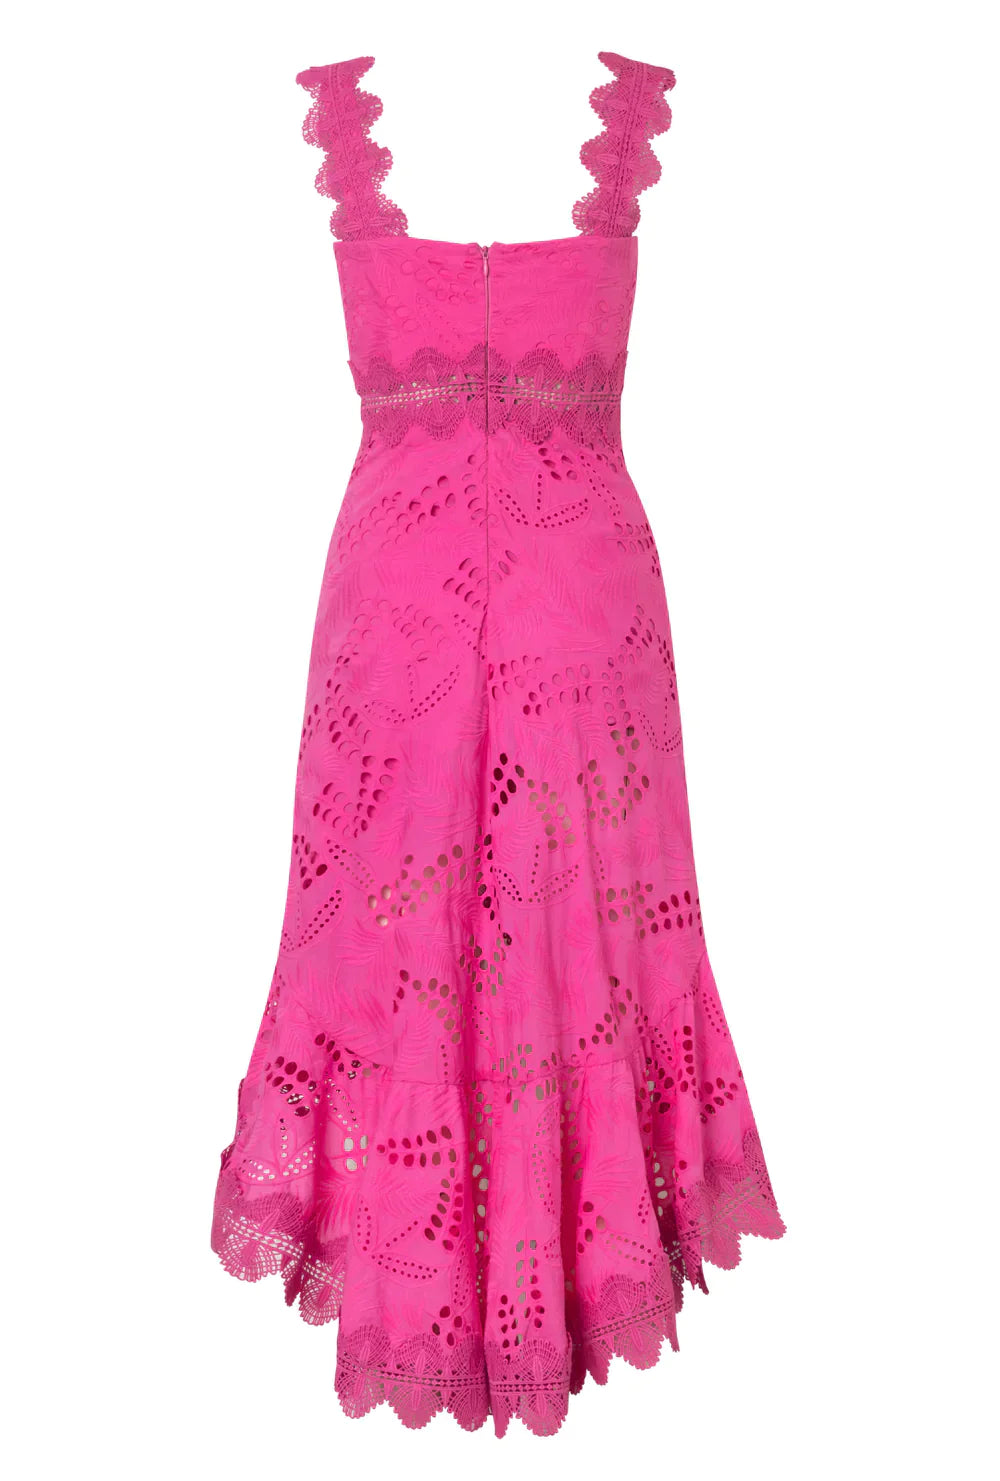 Waimari Jackie Dress Fuchsia - Premium Long dress from Marina St Barth - Just $350! Shop now at Marina St Barth